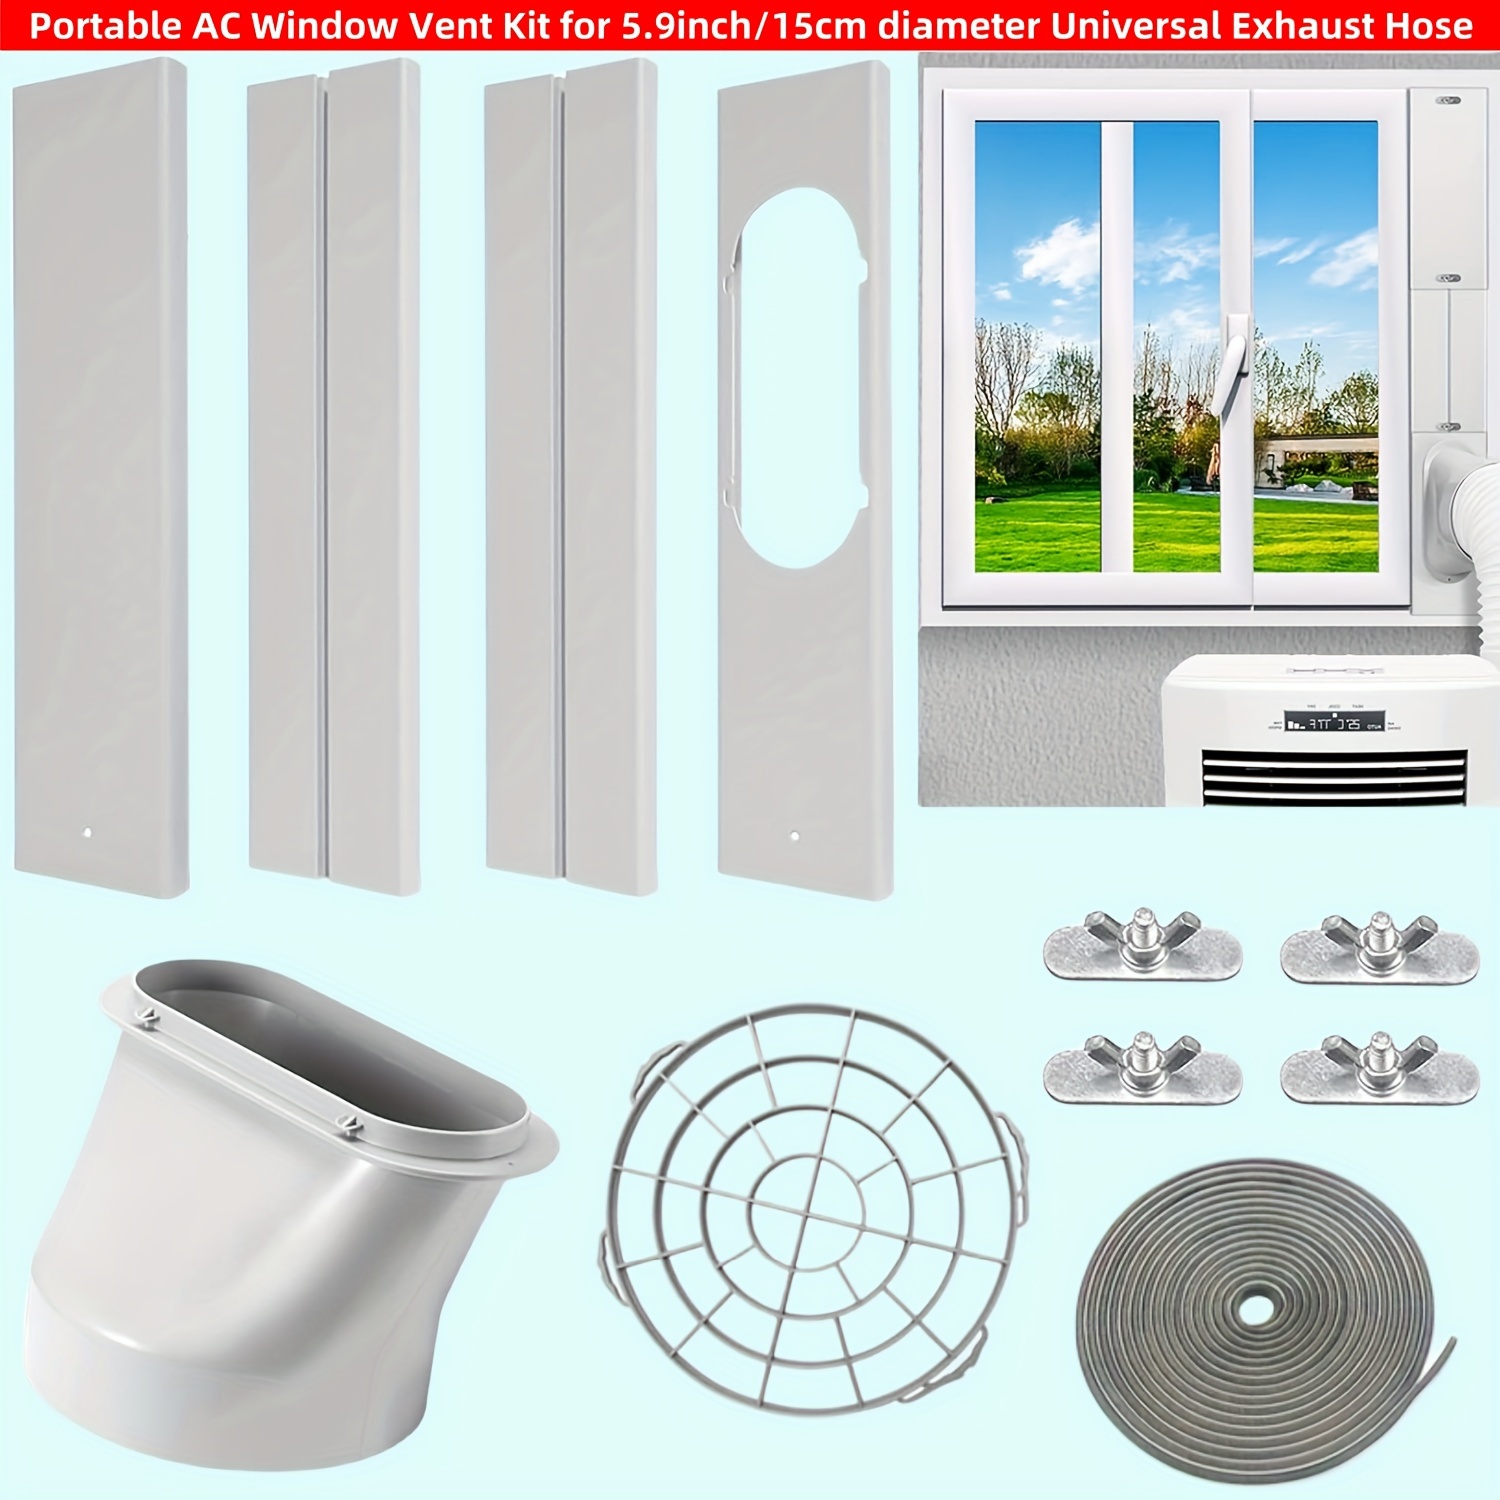  Kit de ventana de CA portátil - Kit universal de ventana de aire  acondicionado portátil con panel de sello de CA